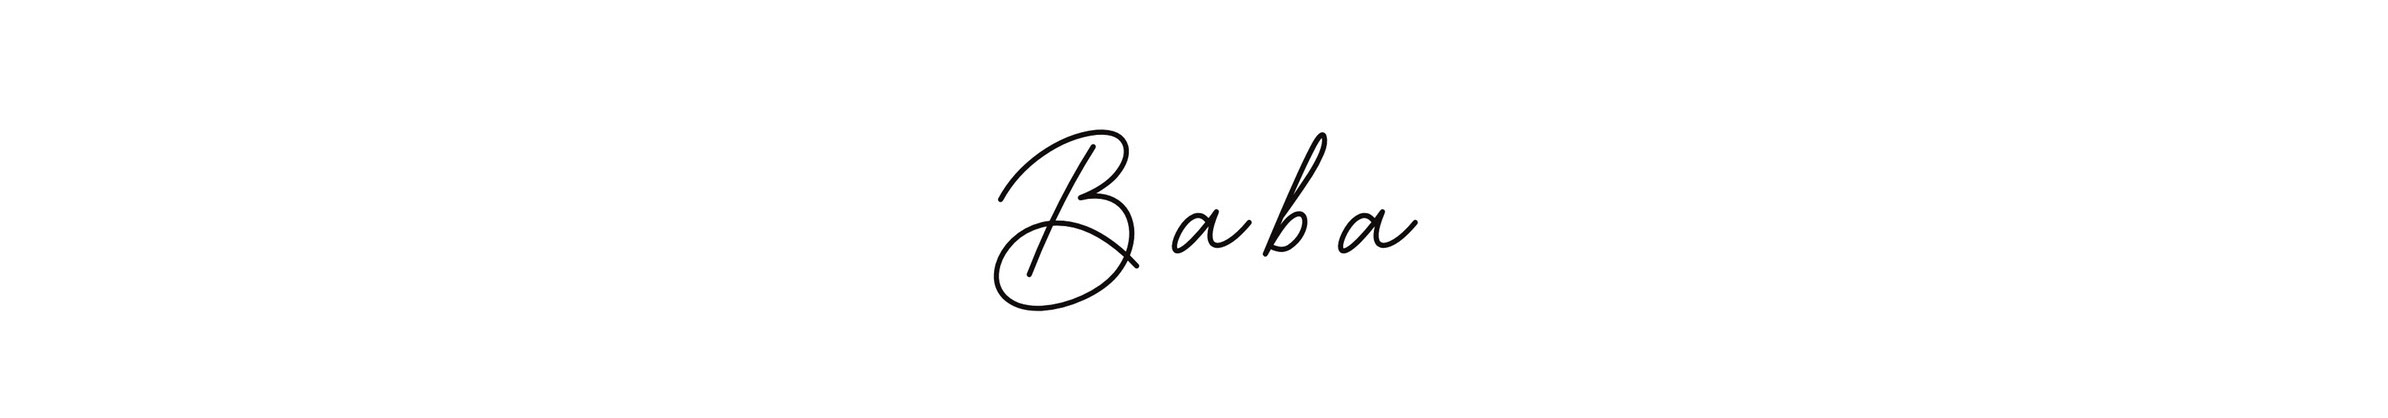 Baba Graphic designer / illustration's profile banner